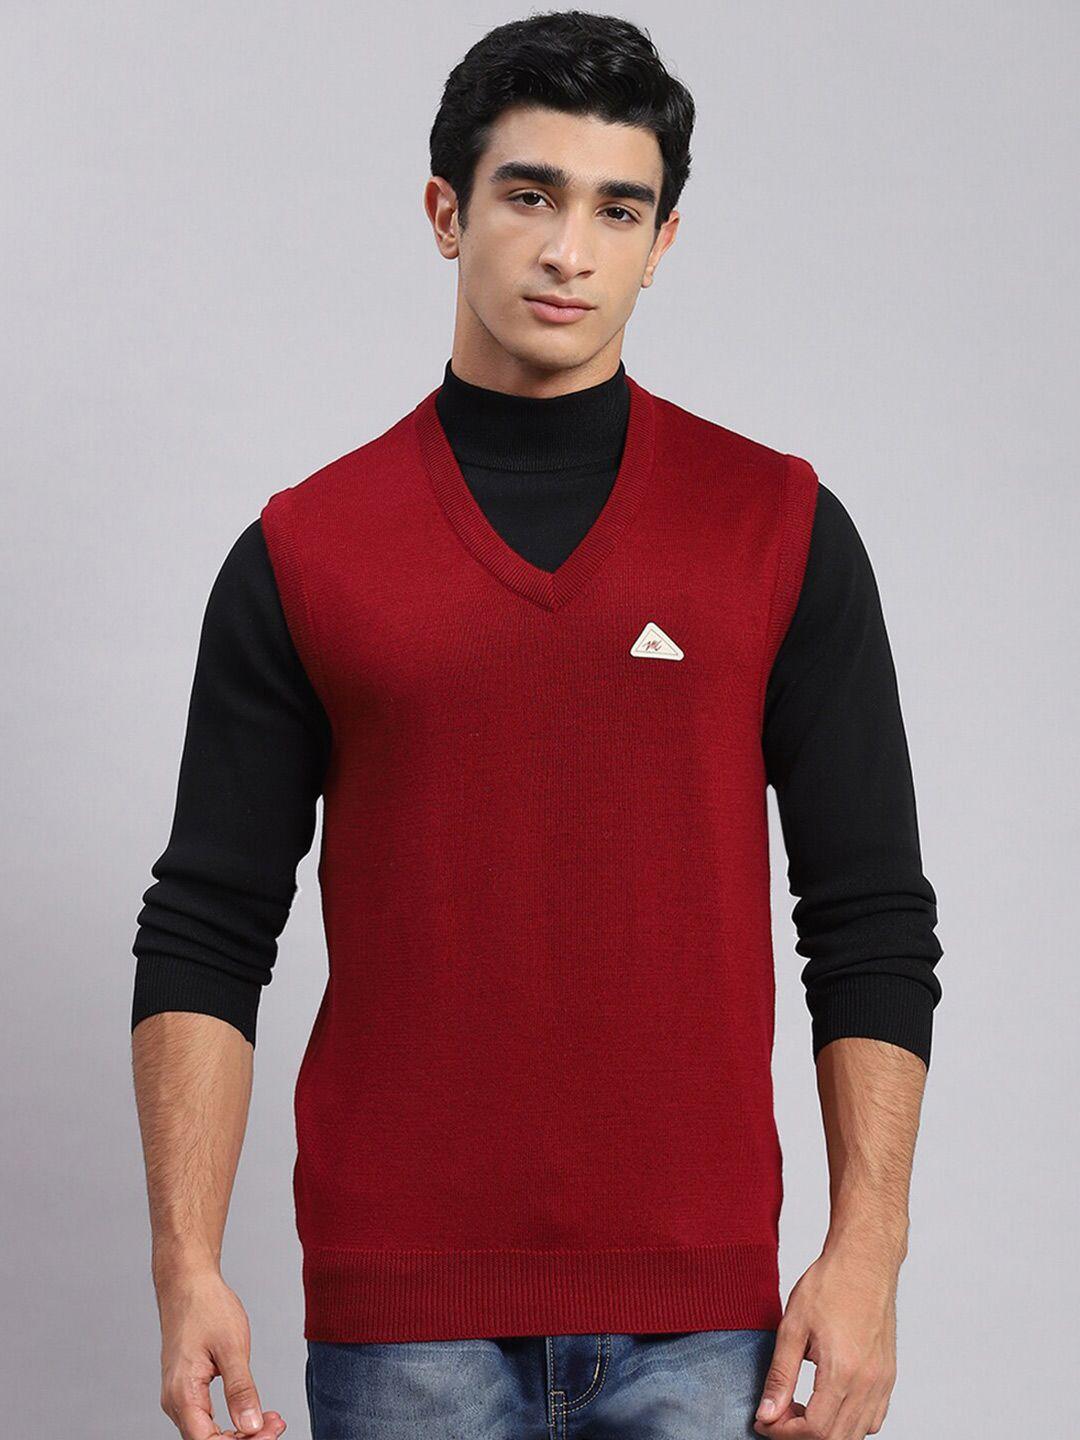 monte carlo v-neck sleeveless woollen sweater vest